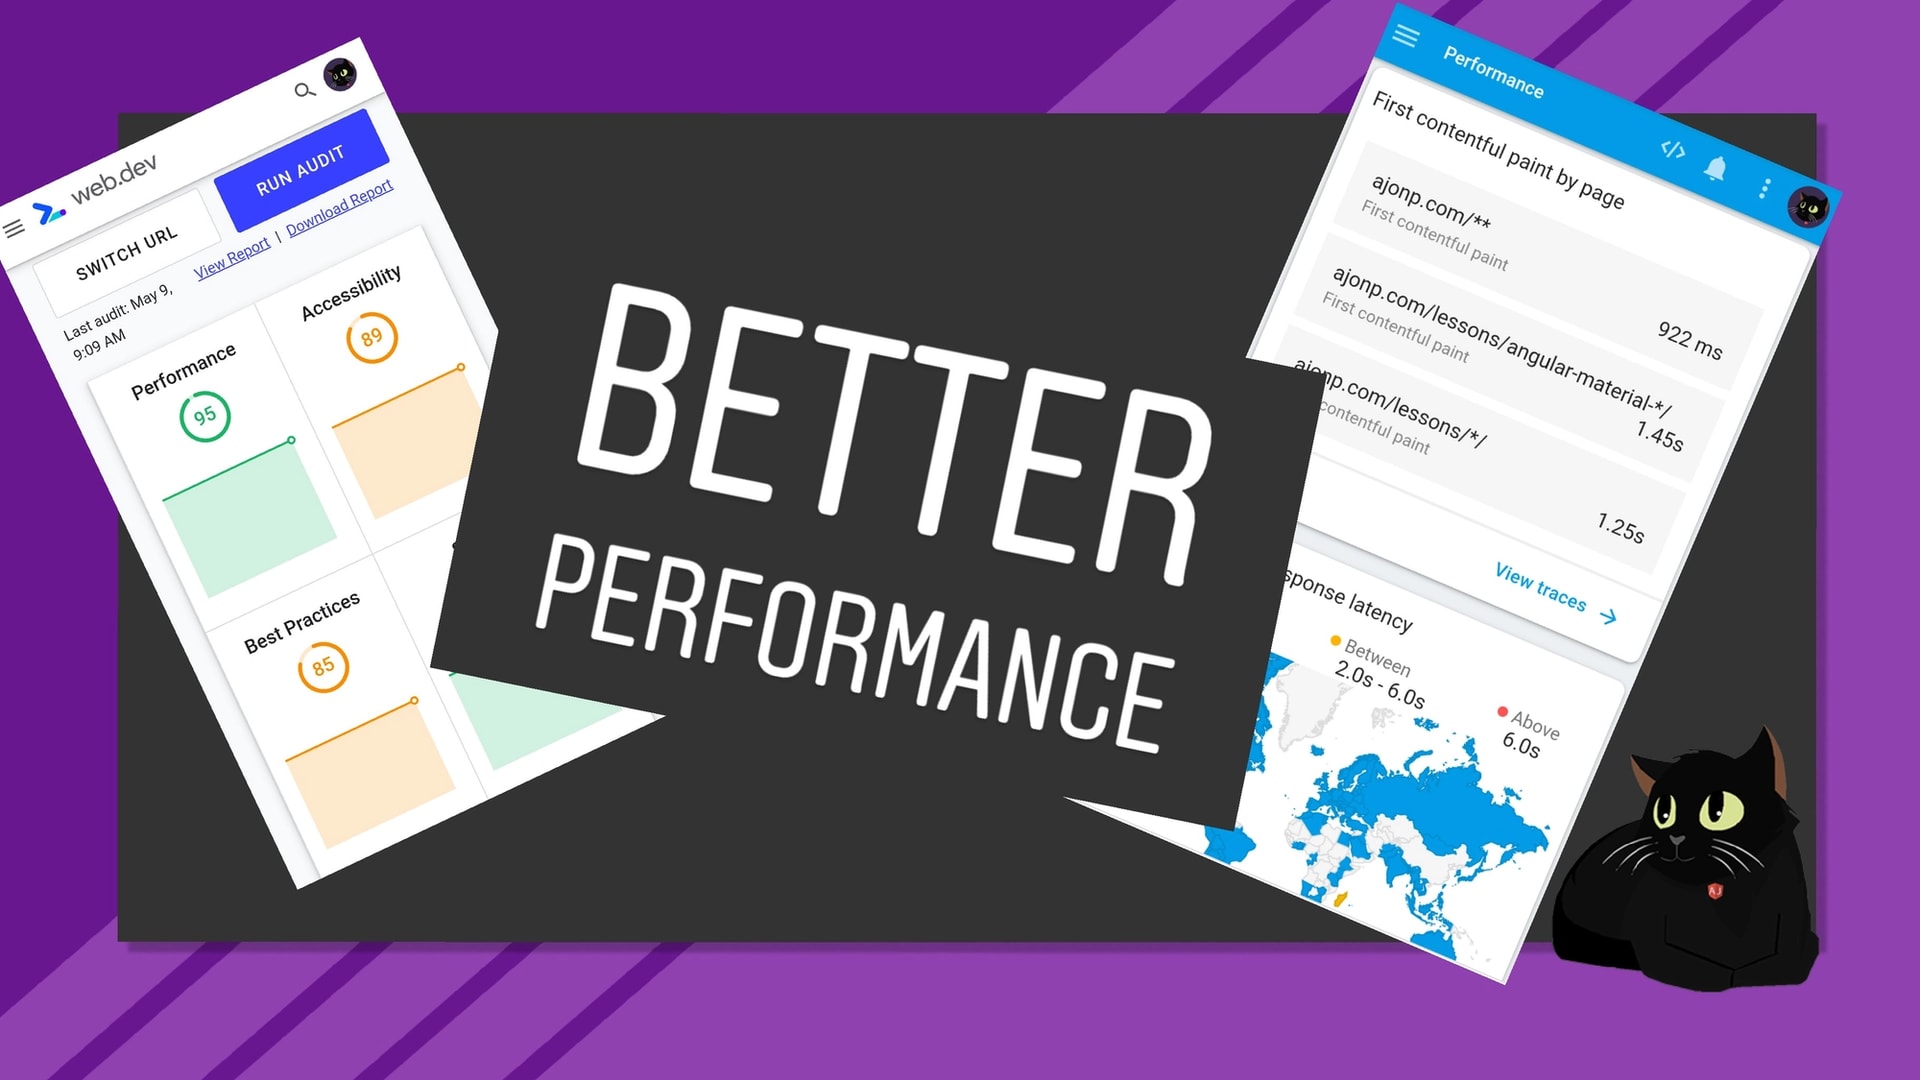 Better Performance through analysis